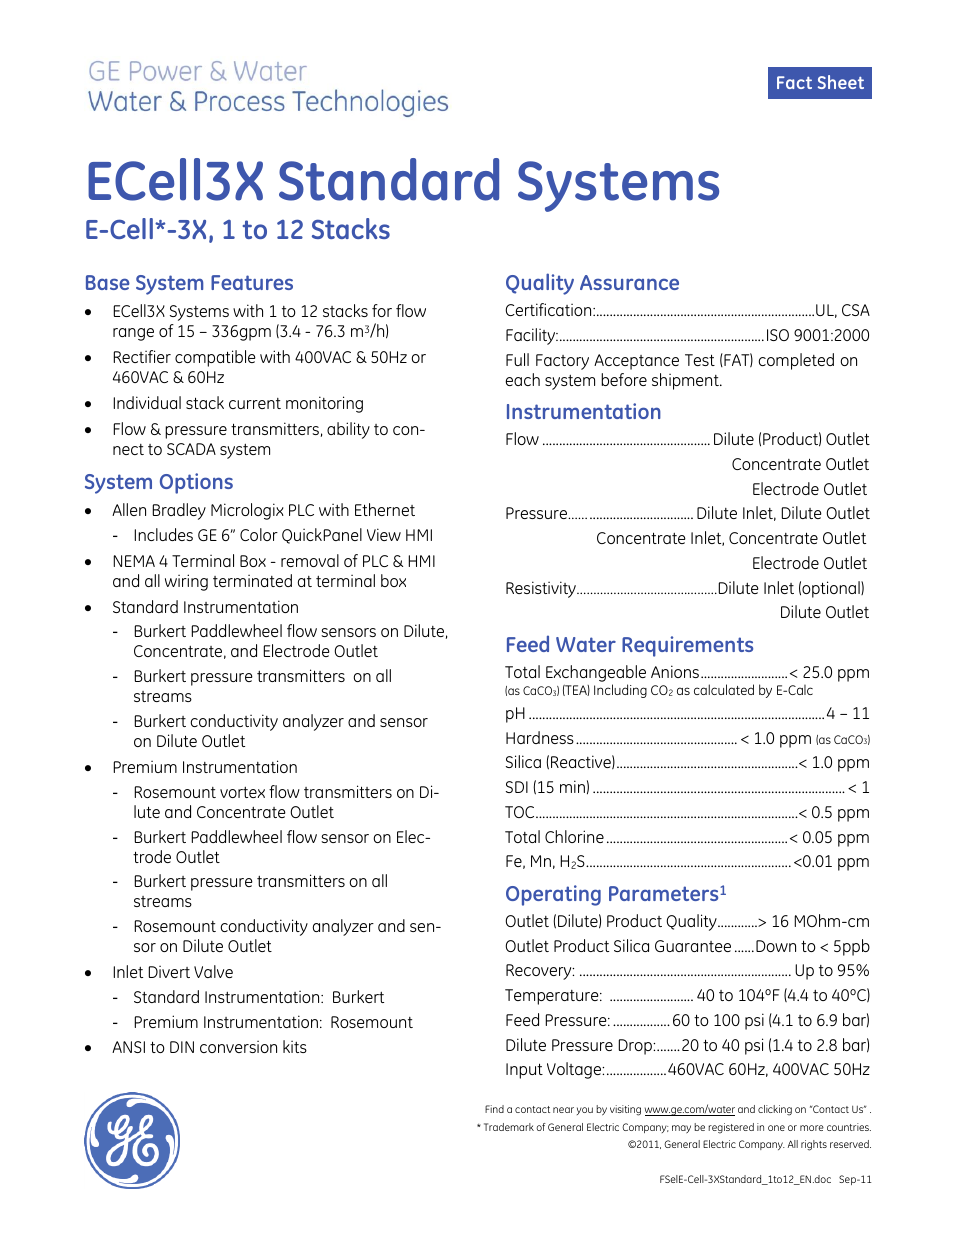 Electrodeionization (EDI) - E-Cell-3X Standard Systems, 1 to 12 Stacks